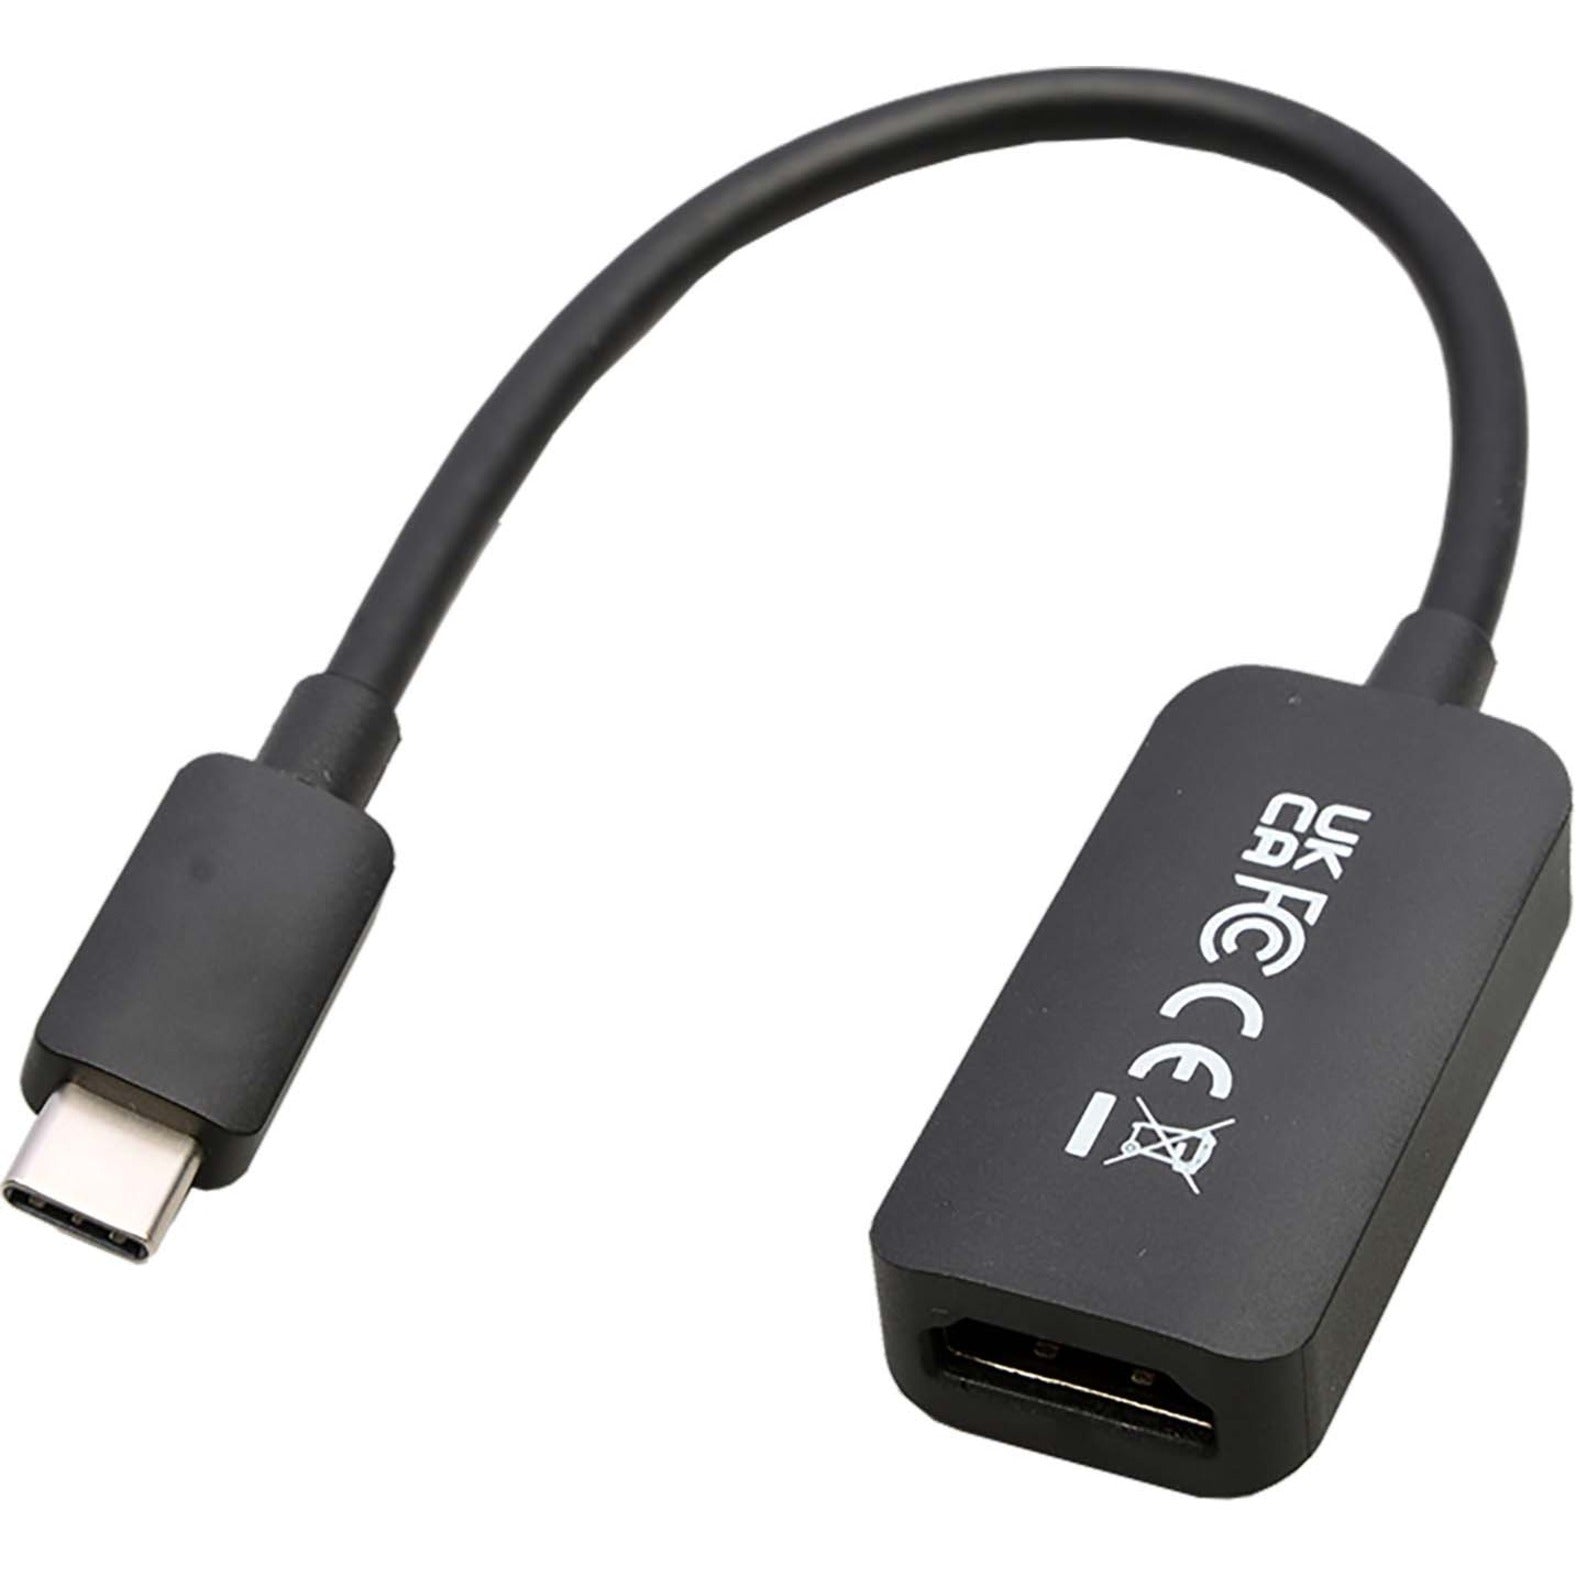 V7 V7USBCHDMI4K60HZ USB-C Male to HDMI 2.0 Female 21.6 Gbps 4K UHD, Shielded, Plug and Play